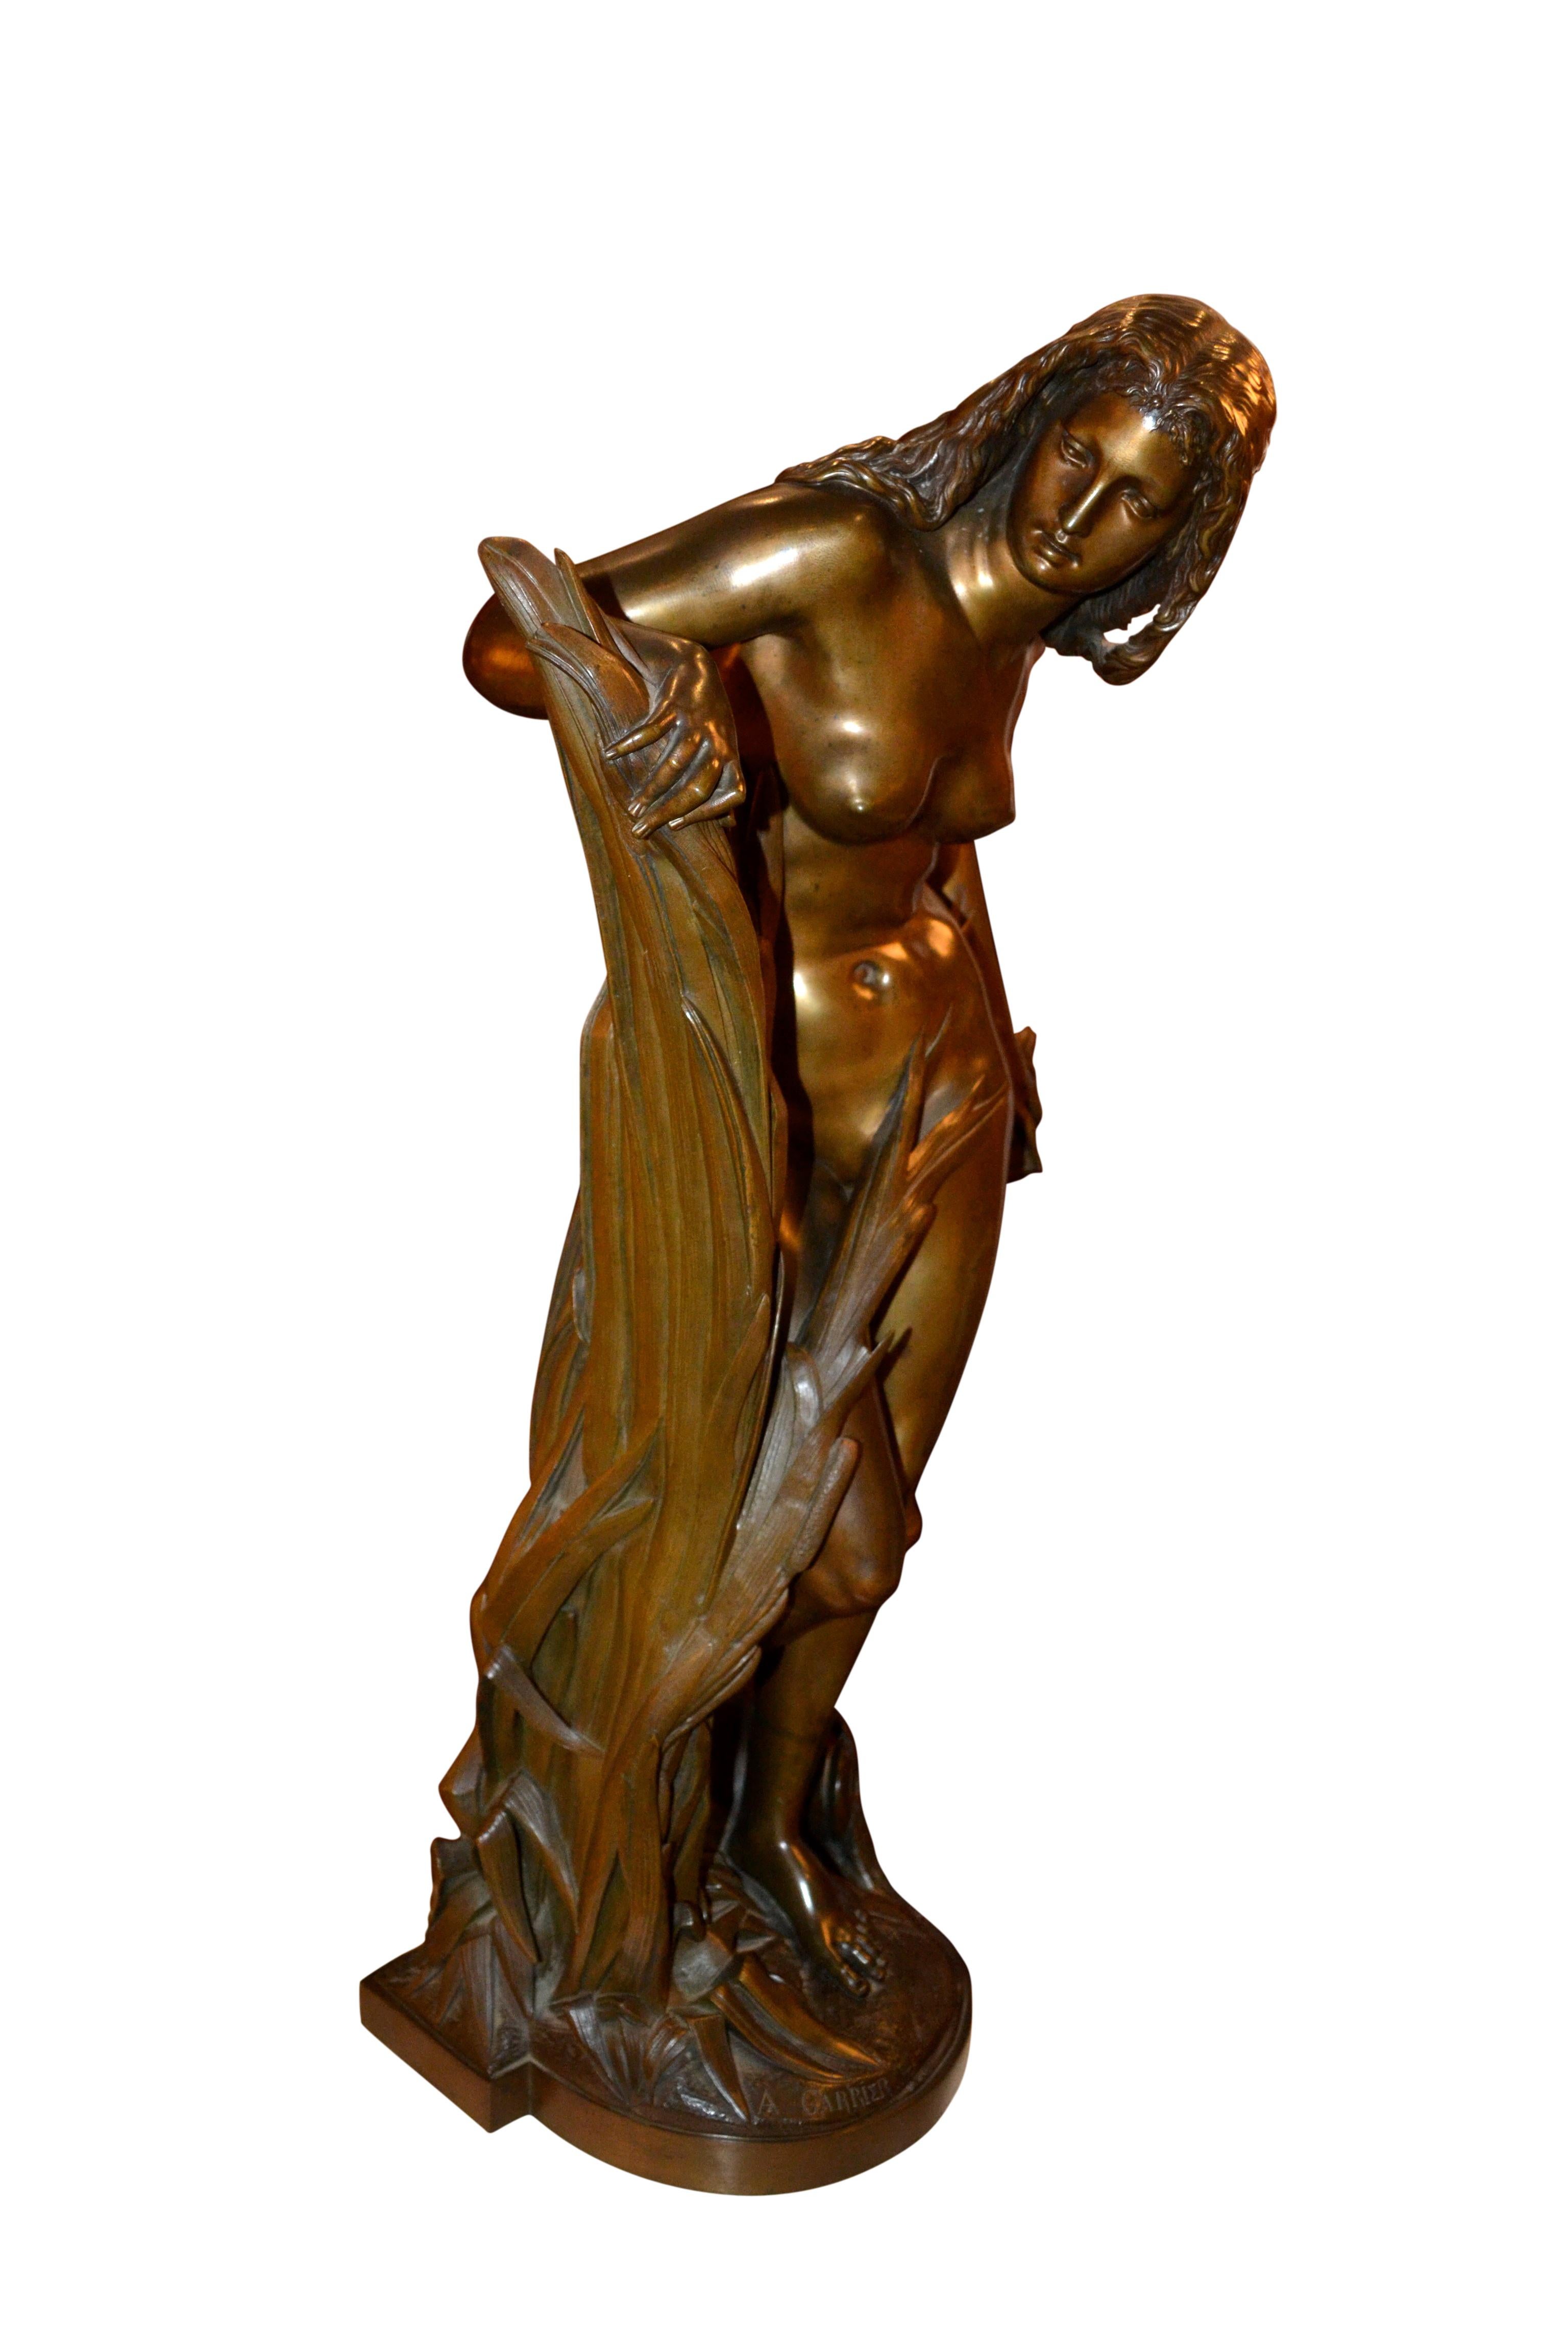 a.carrier bronze statues